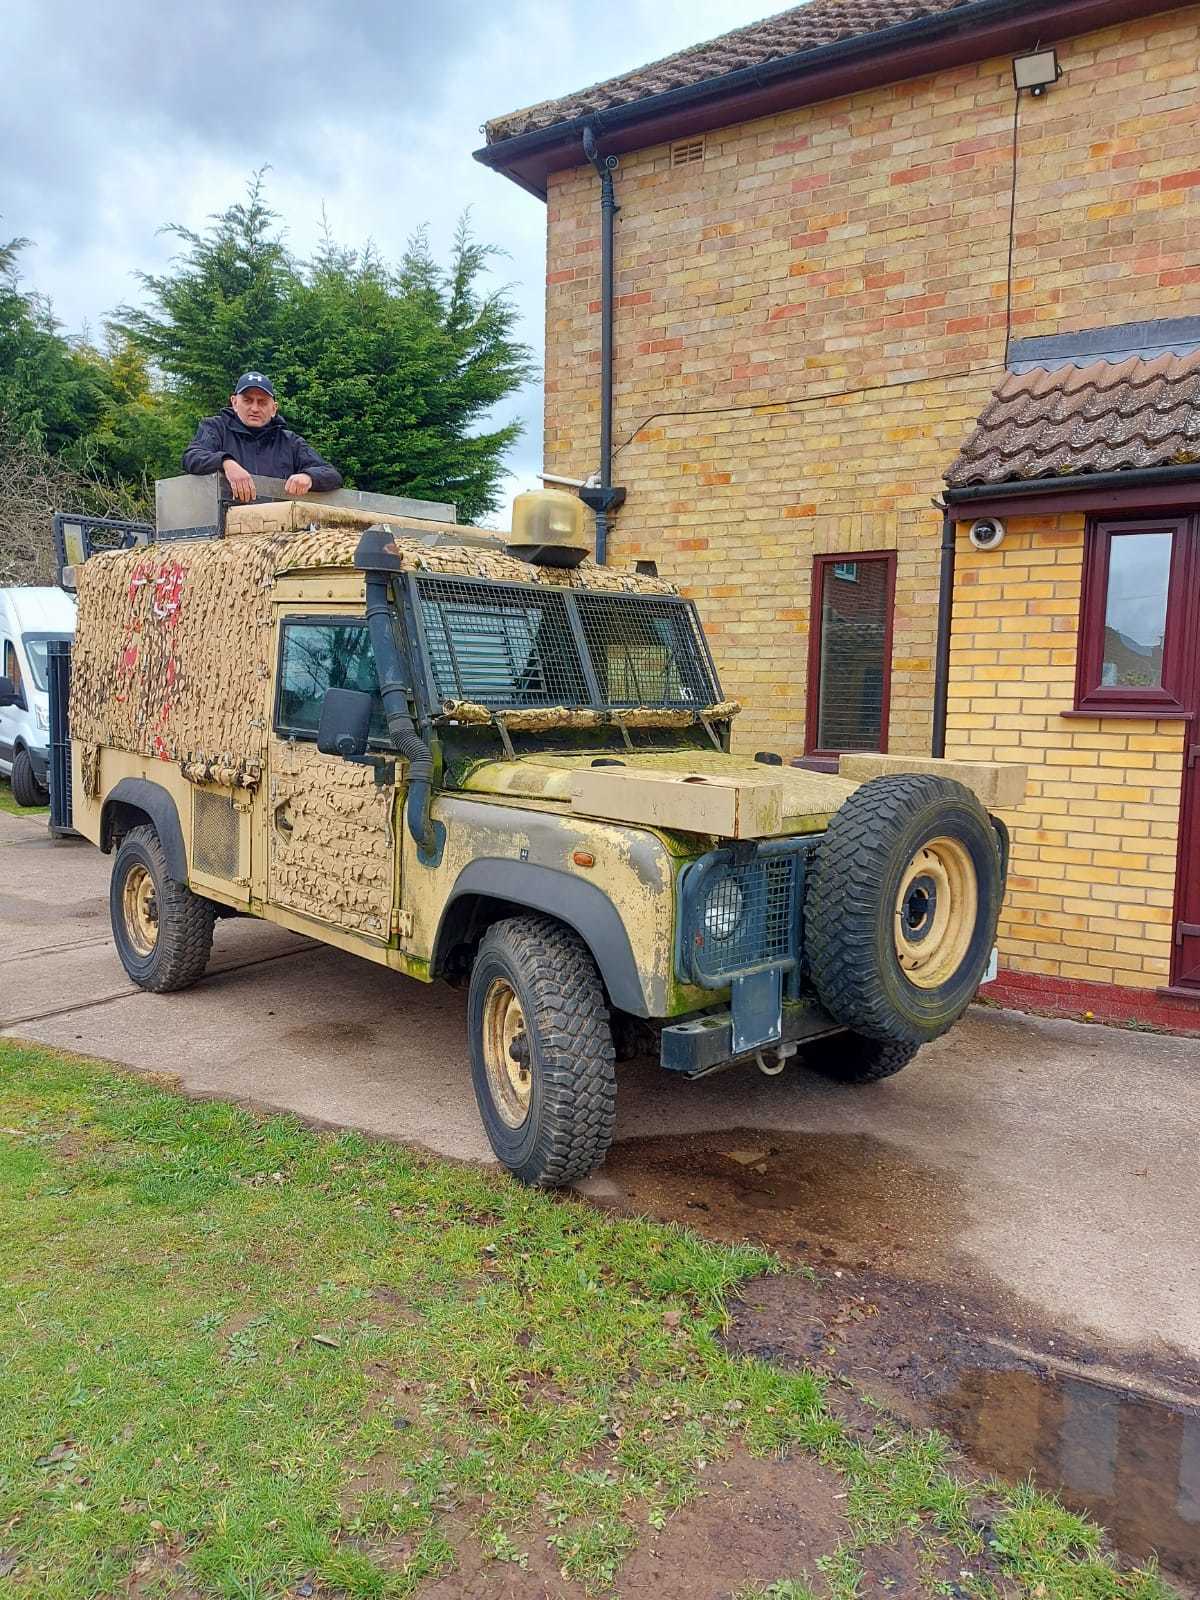 Sebastian Thornton with his military-grade Land Rover